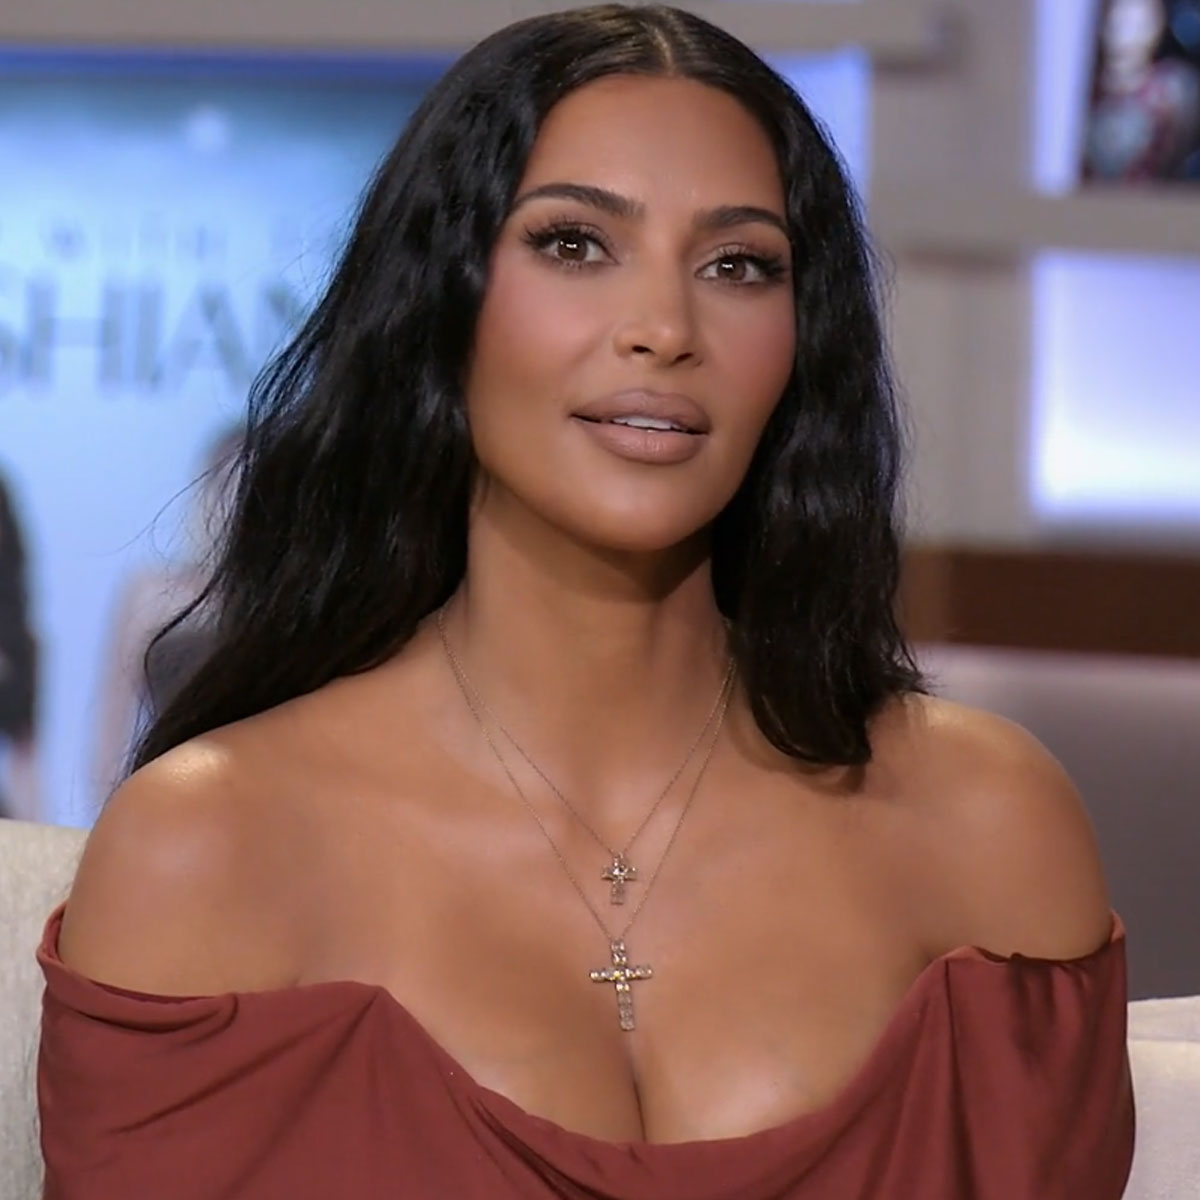 New Porn Kim Kardashian - Kim Kardashian Admits Infamous Sex Tape Helped Success of KUWTK - E! Online